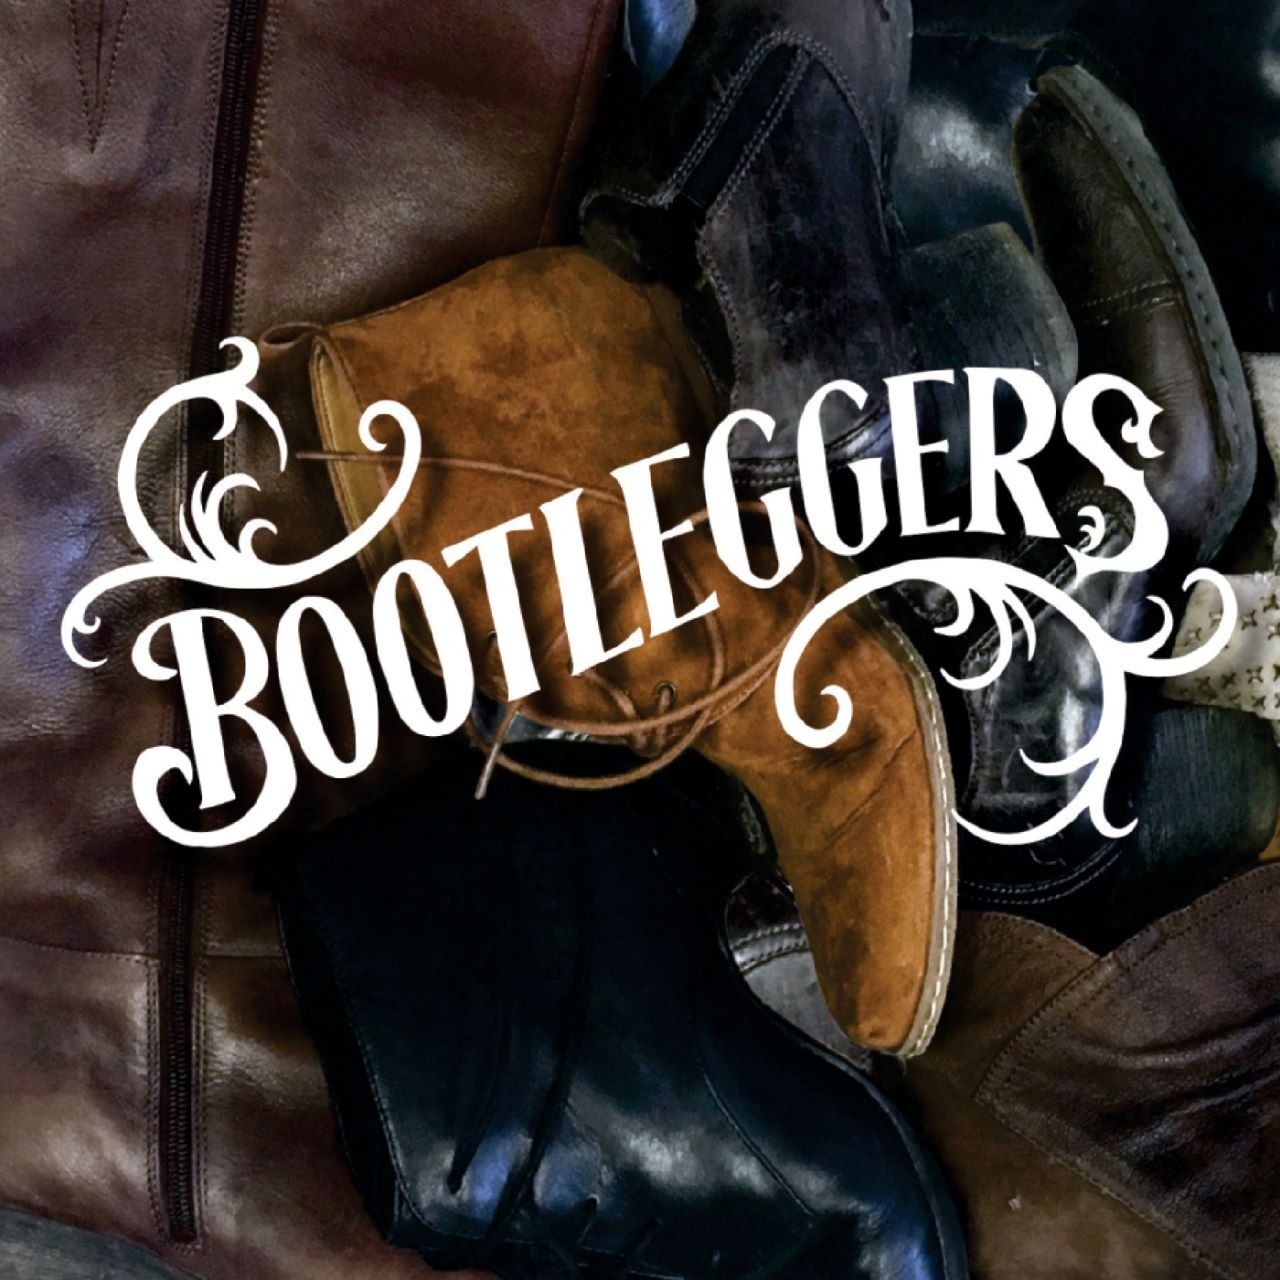 Bootleggers - Bootleggers cover album